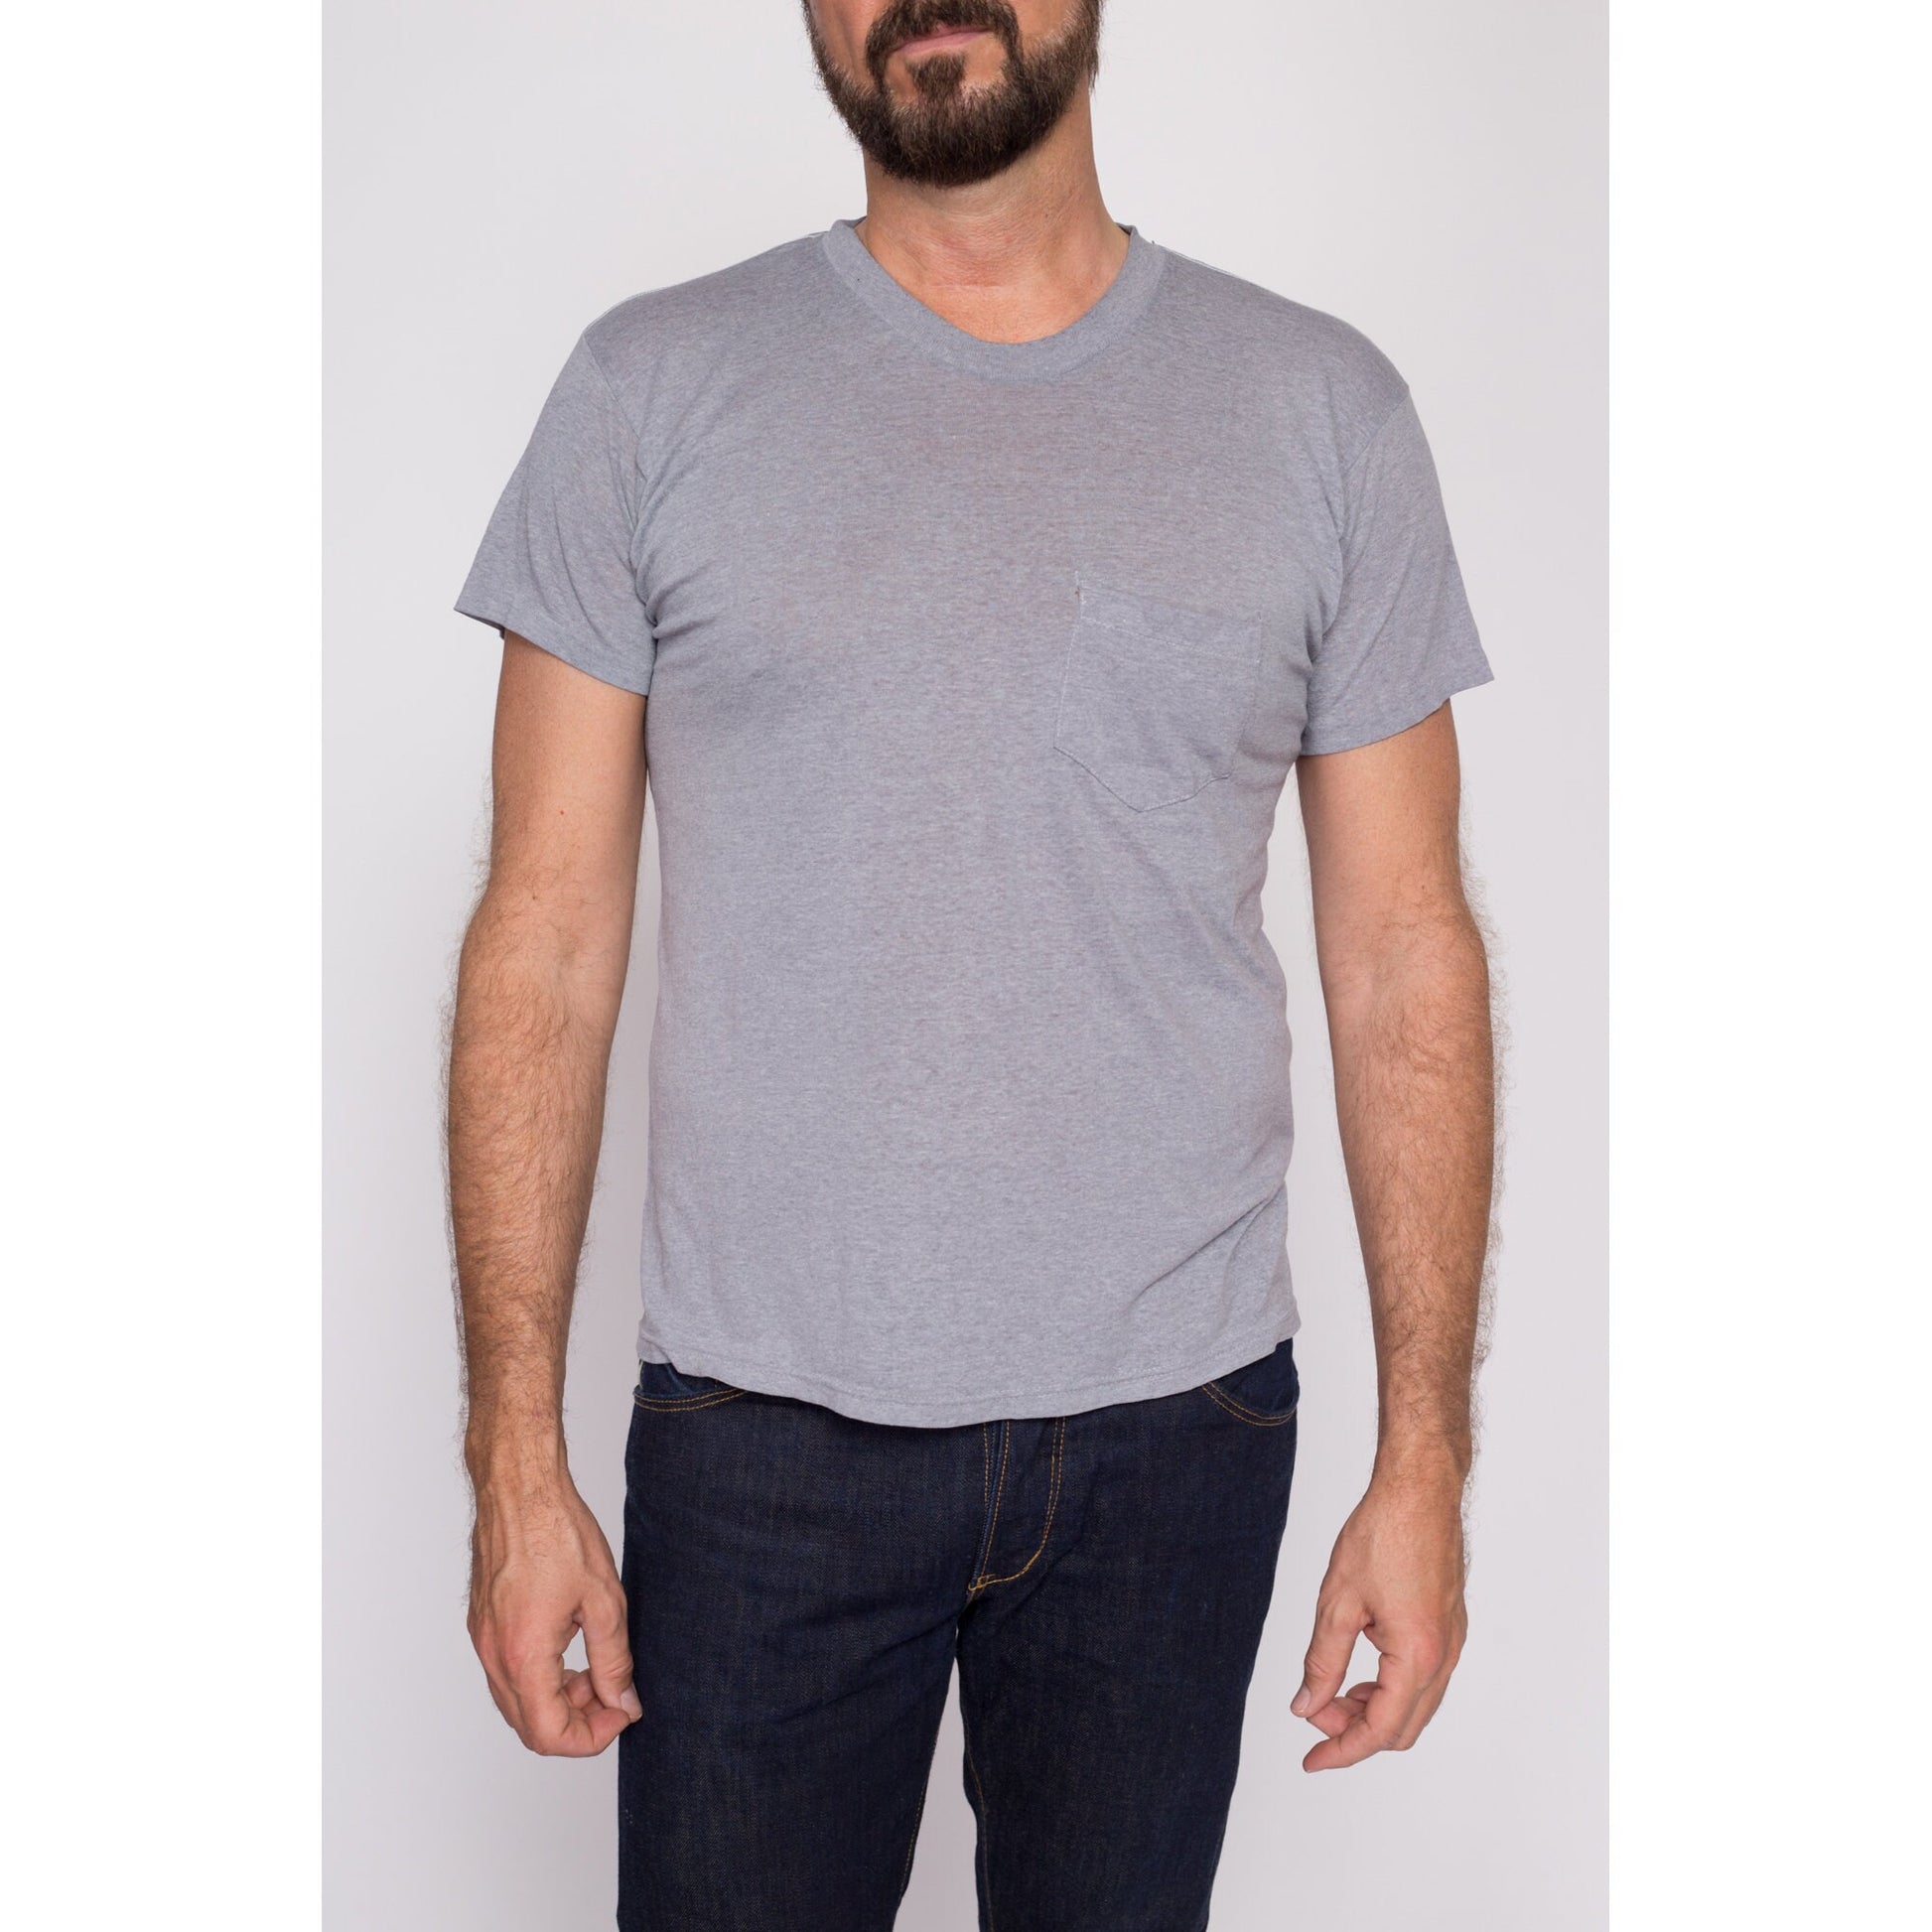 M| 80s Plain Grey Pocket Tee - Men's Medium | Vintage Paper Thin Blank T Shirt